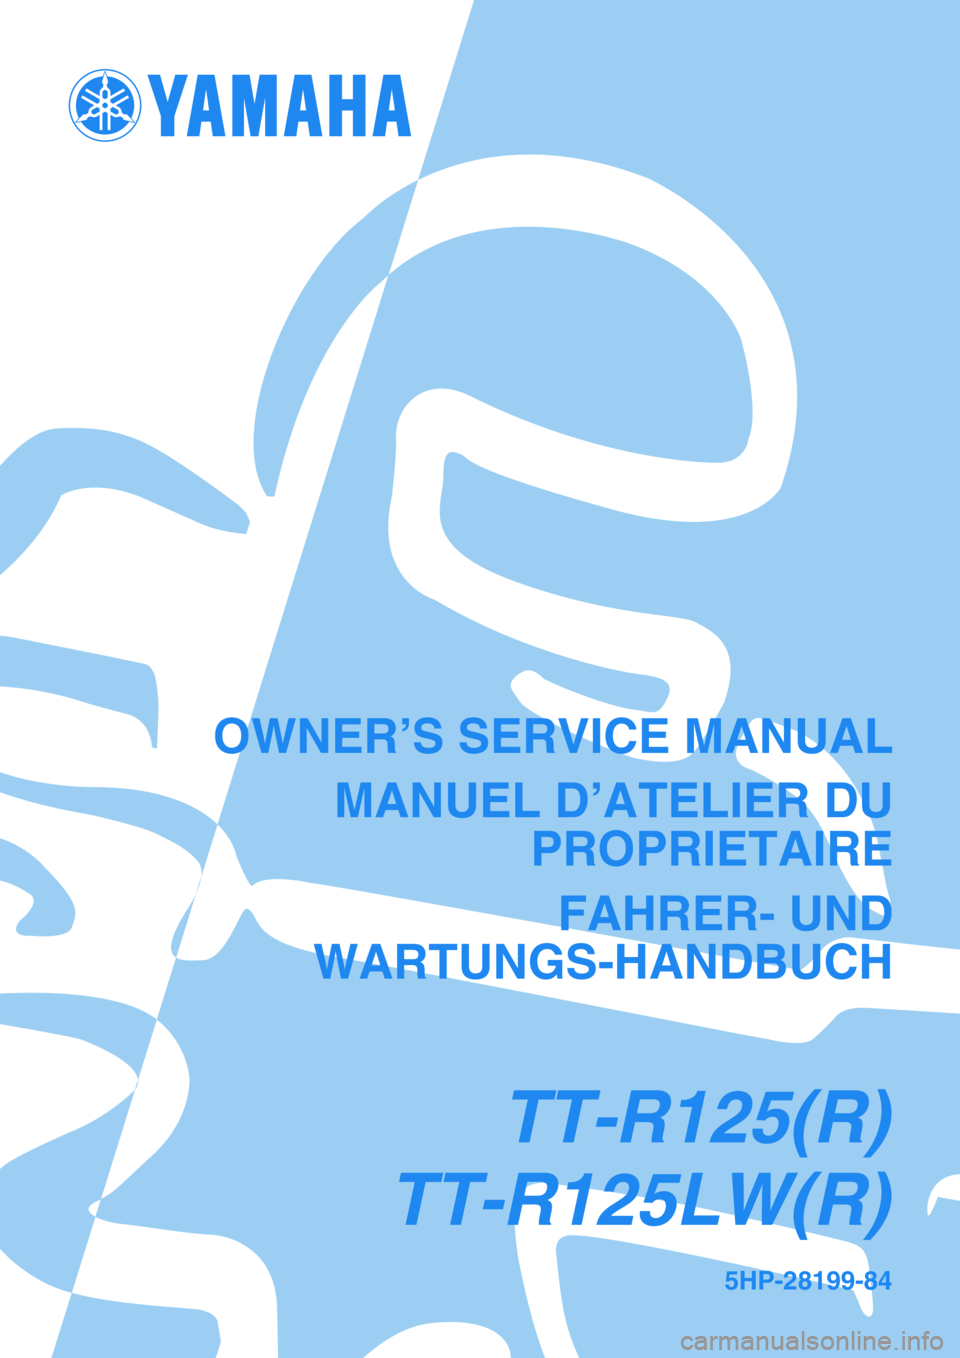 YAMAHA TTR125 2003  Betriebsanleitungen (in German) 5HP-28199-84
OWNER’S SERVICE MANUAL
MANUEL D’ATELIER DU
PROPRIETAIRE
FAHRER- UND
WARTUNGS-HANDBUCH
TT-R125(R)
TT-R125LW(R) 